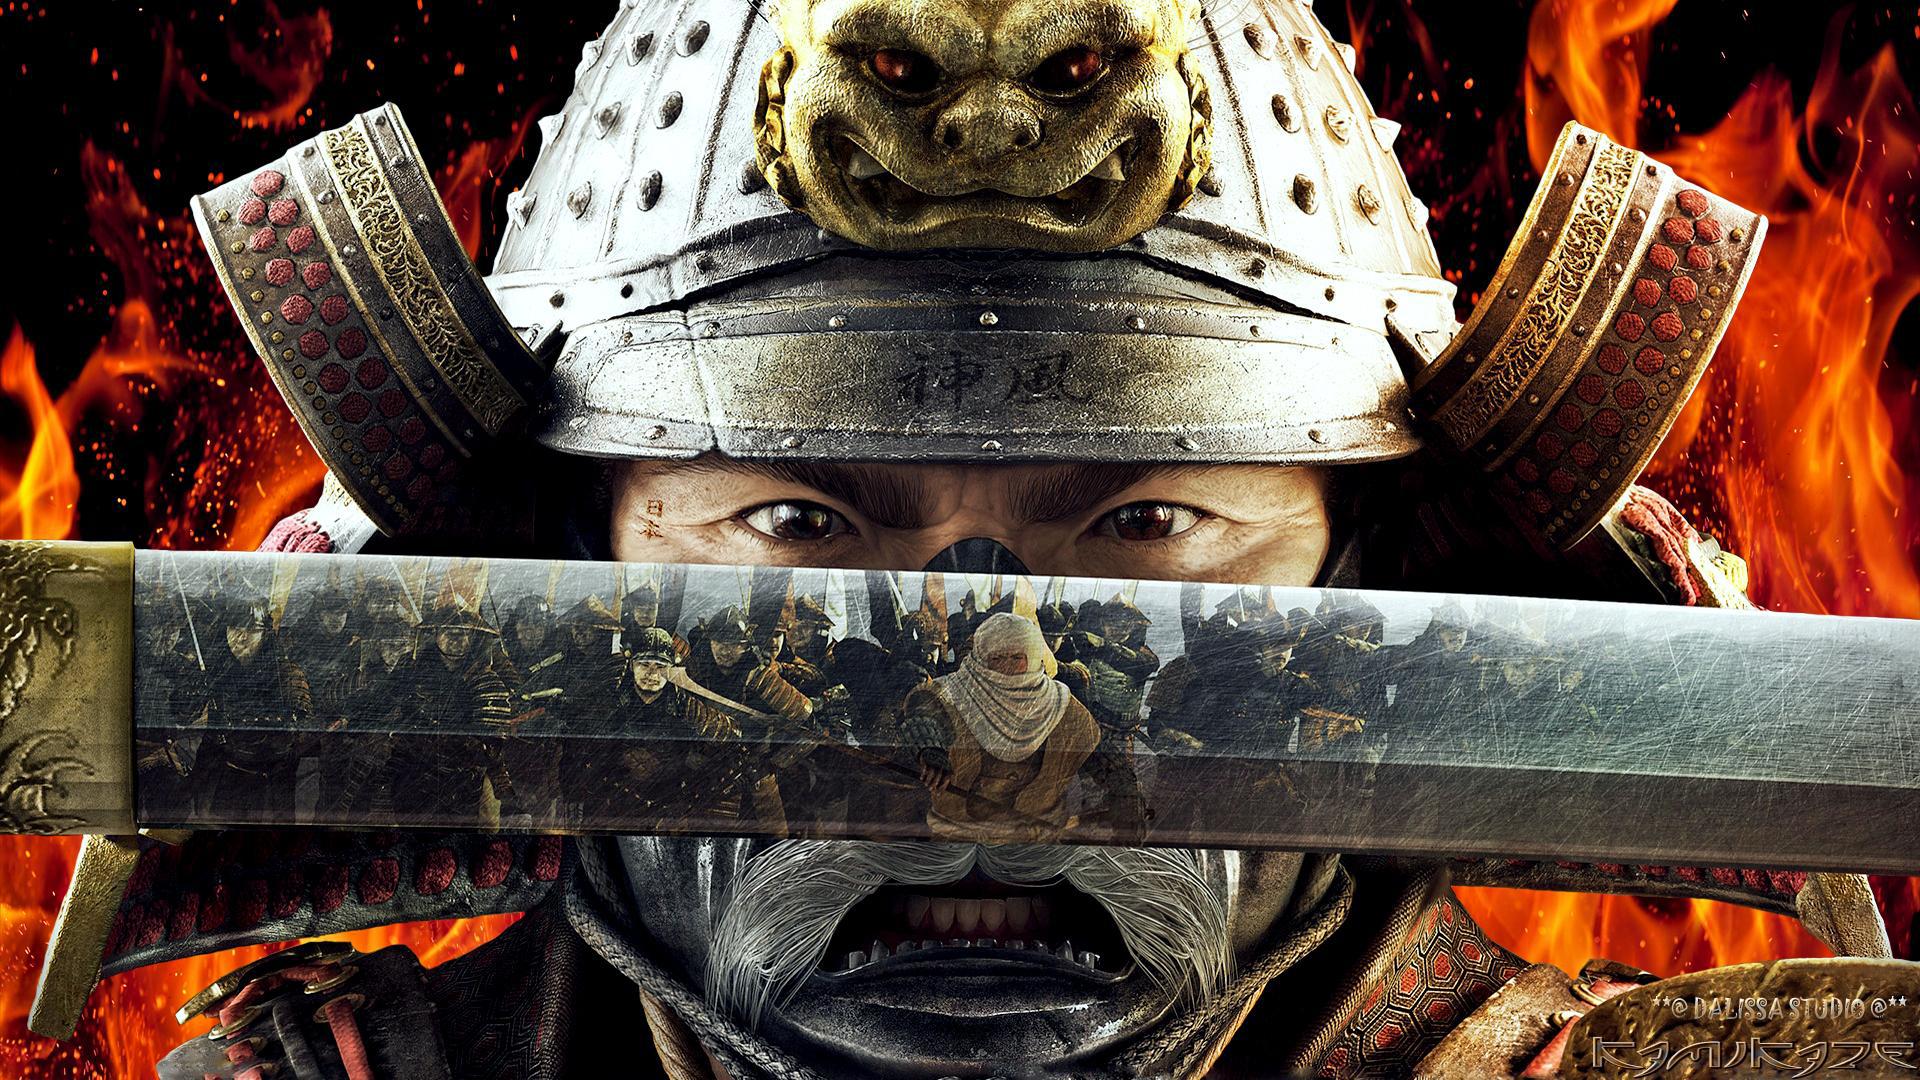 kamikaze wallpaper,helmet,personal protective equipment,samurai,games,fictional character